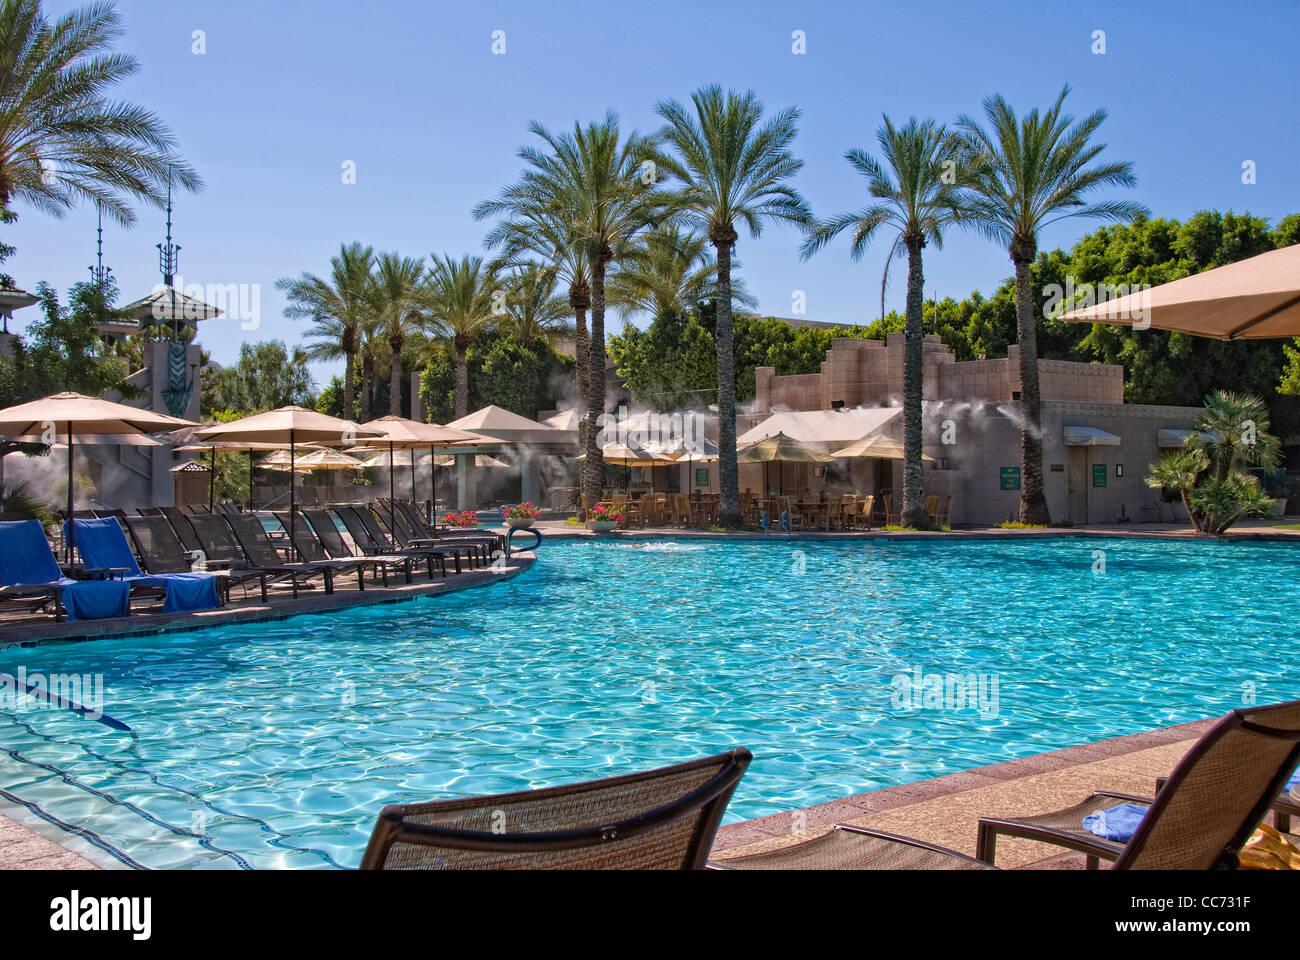 The pool area at the Biltmore Resort in Phoenix, Arizona Stock Photo